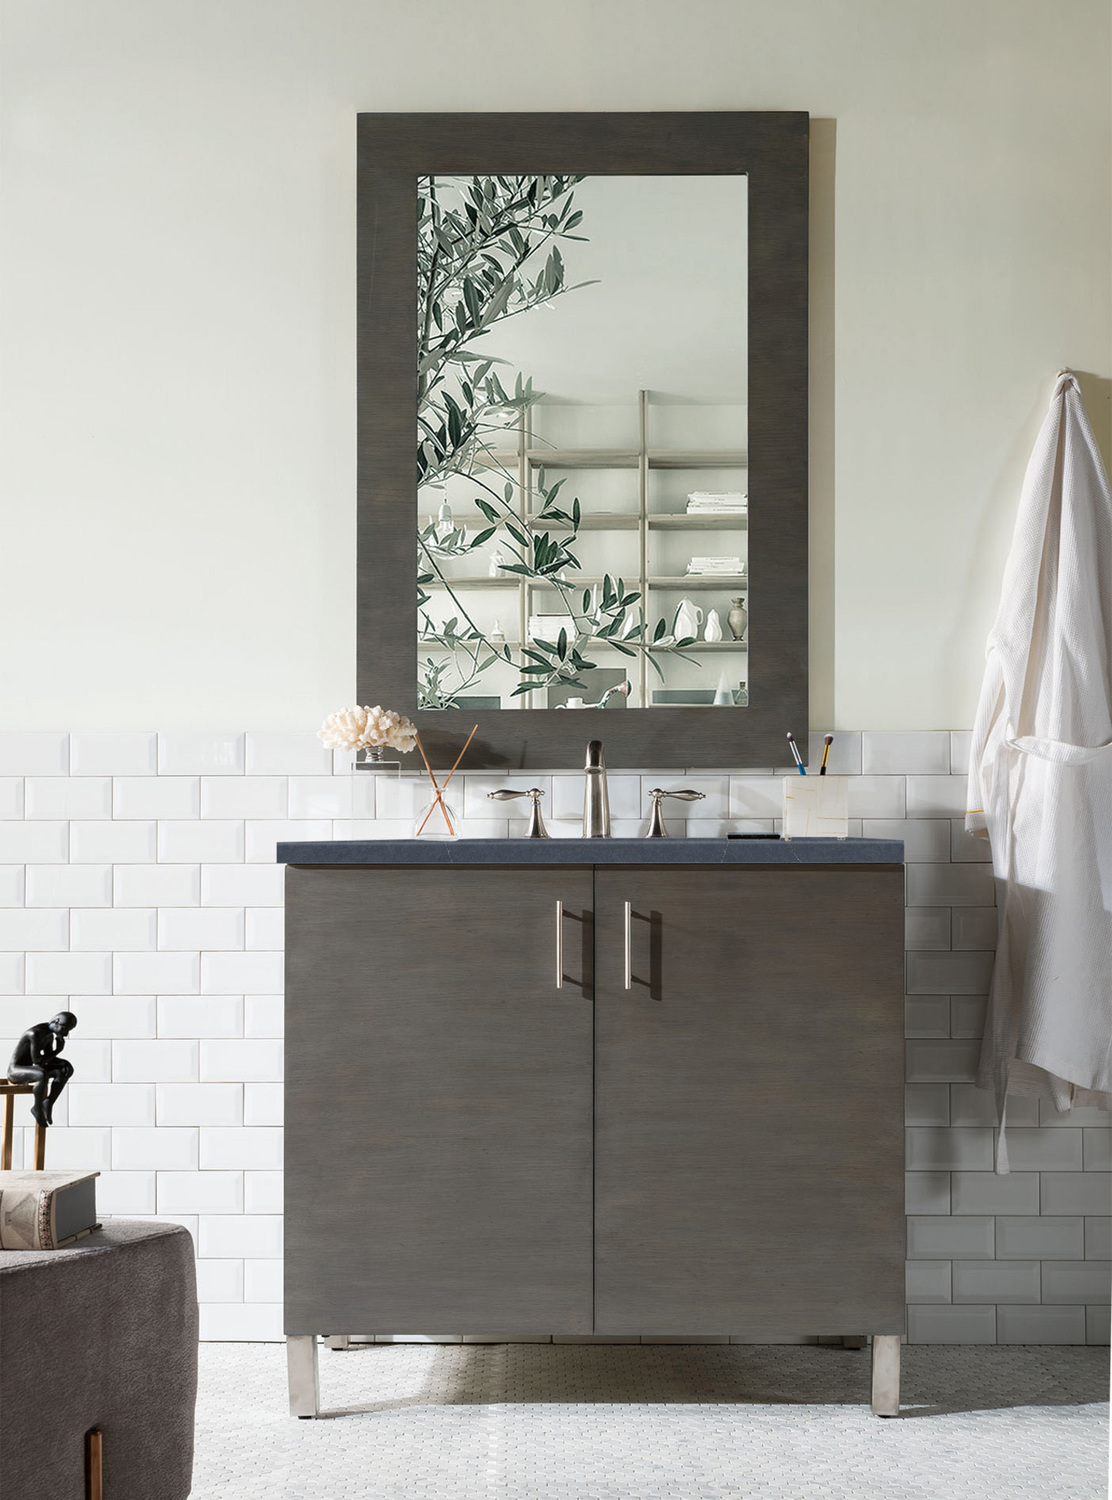 rustic bathroom vanity unit James Martin Vanity Silver Oak Contemporary/Modern, Transitional